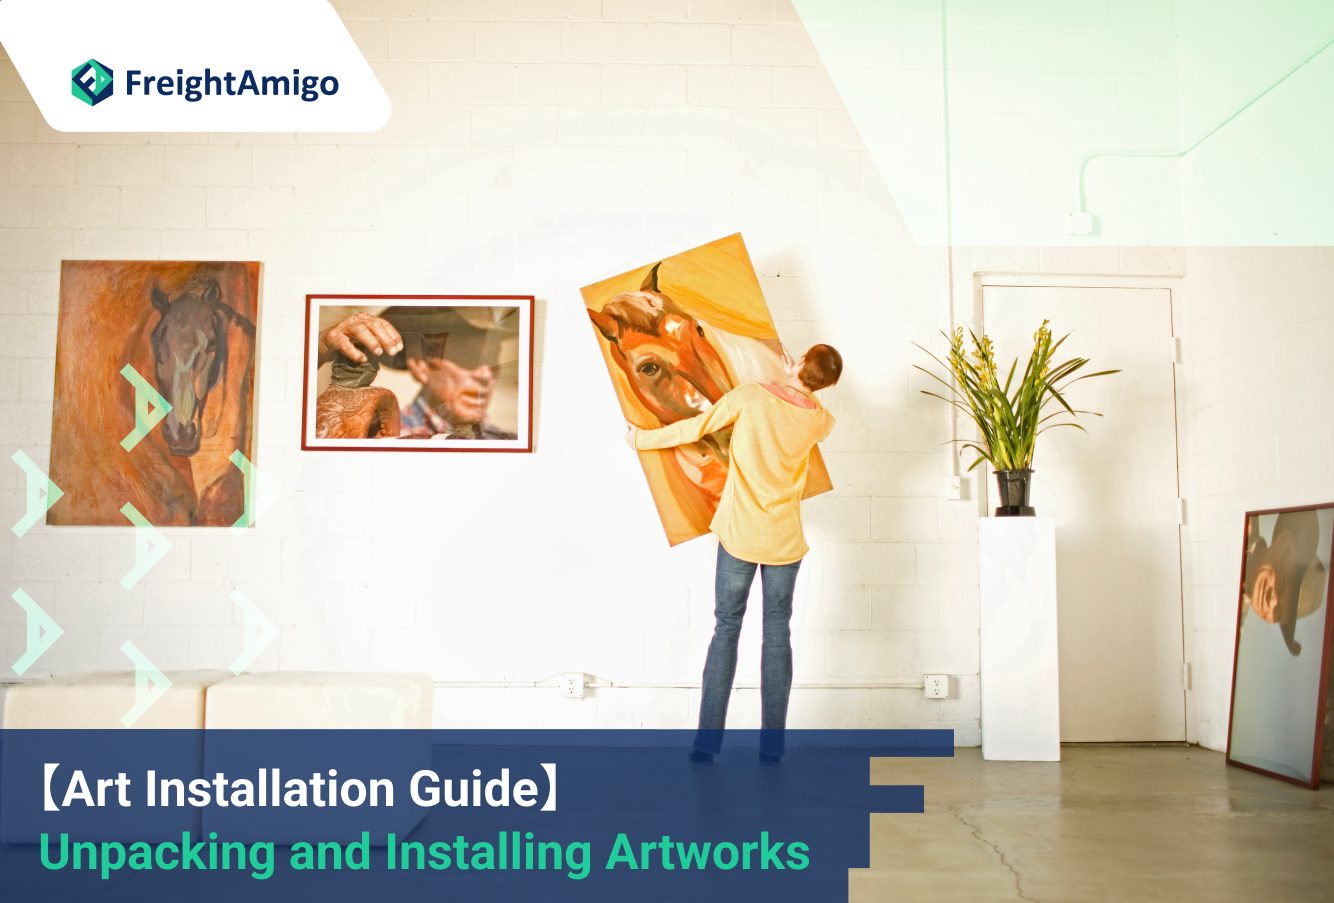 Art Installation Guide_FreightAmigo